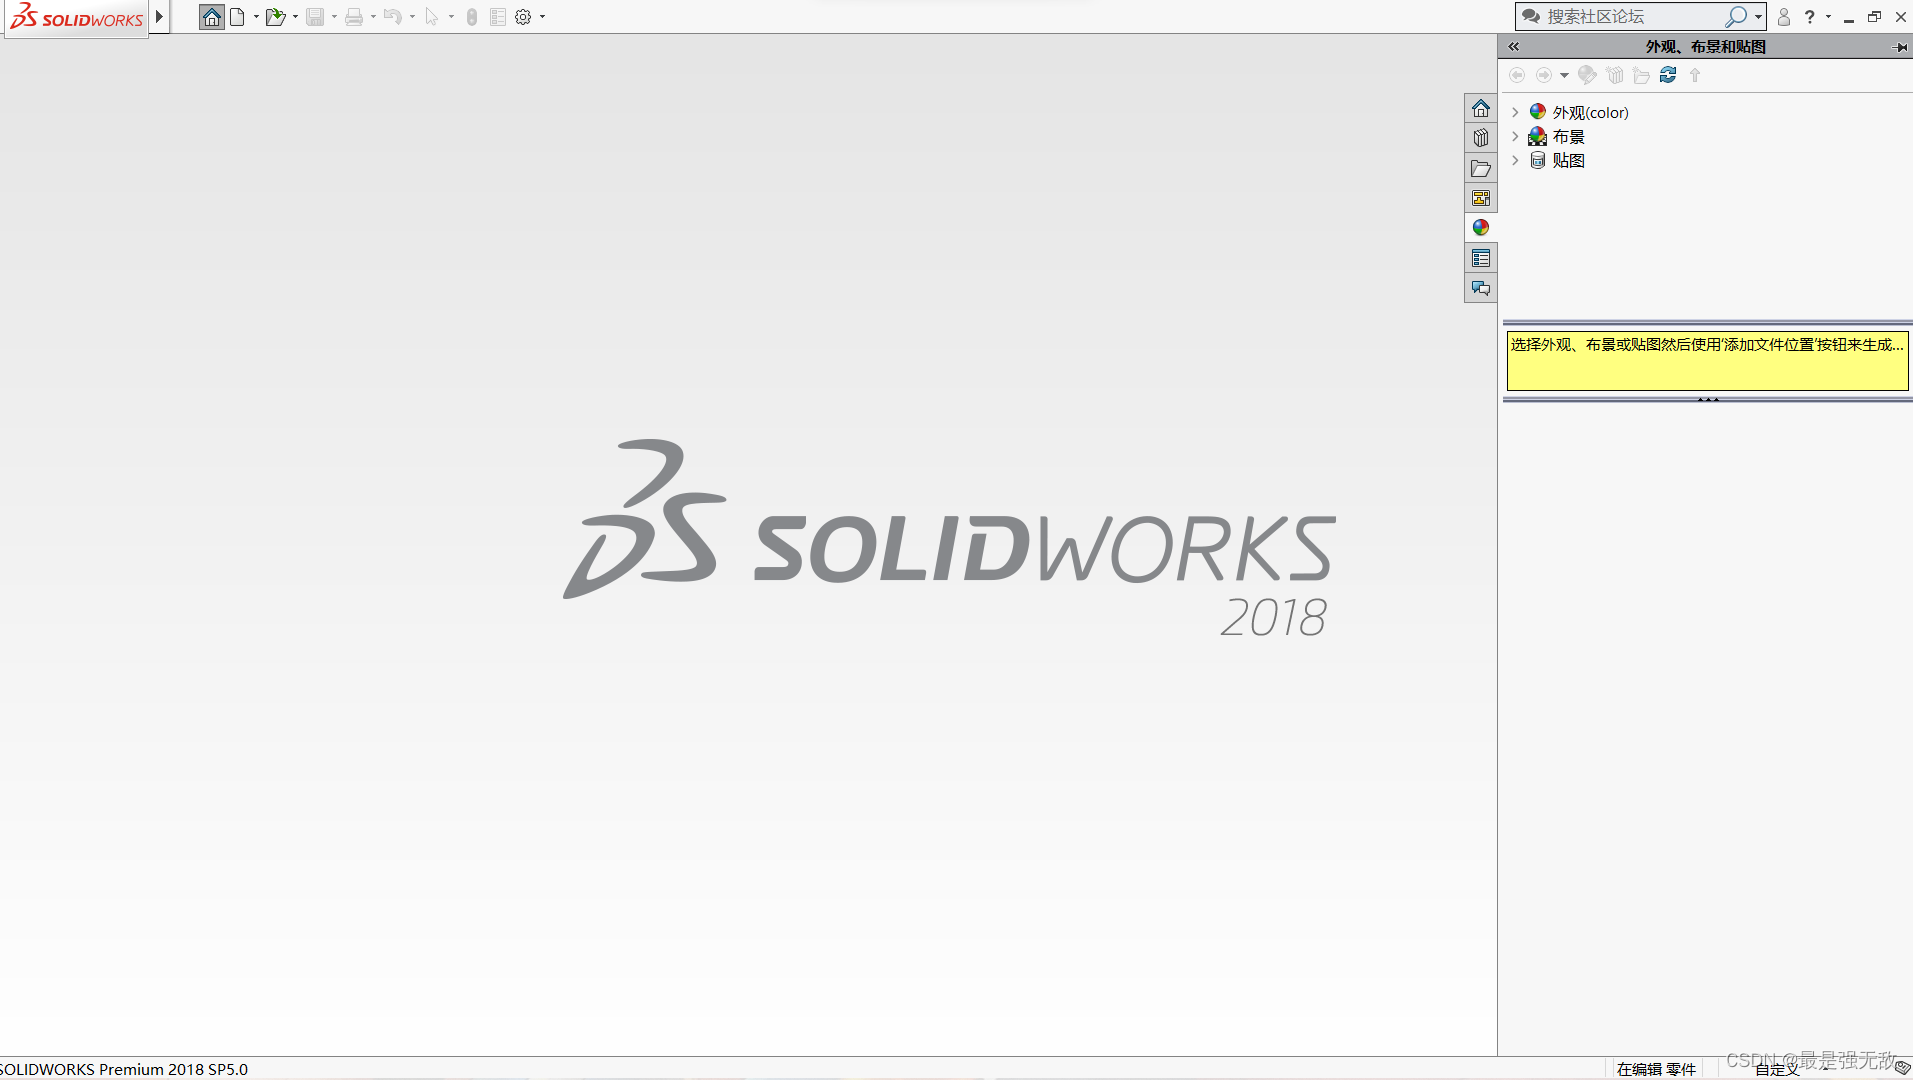 solidworks 2018 activator ssq download